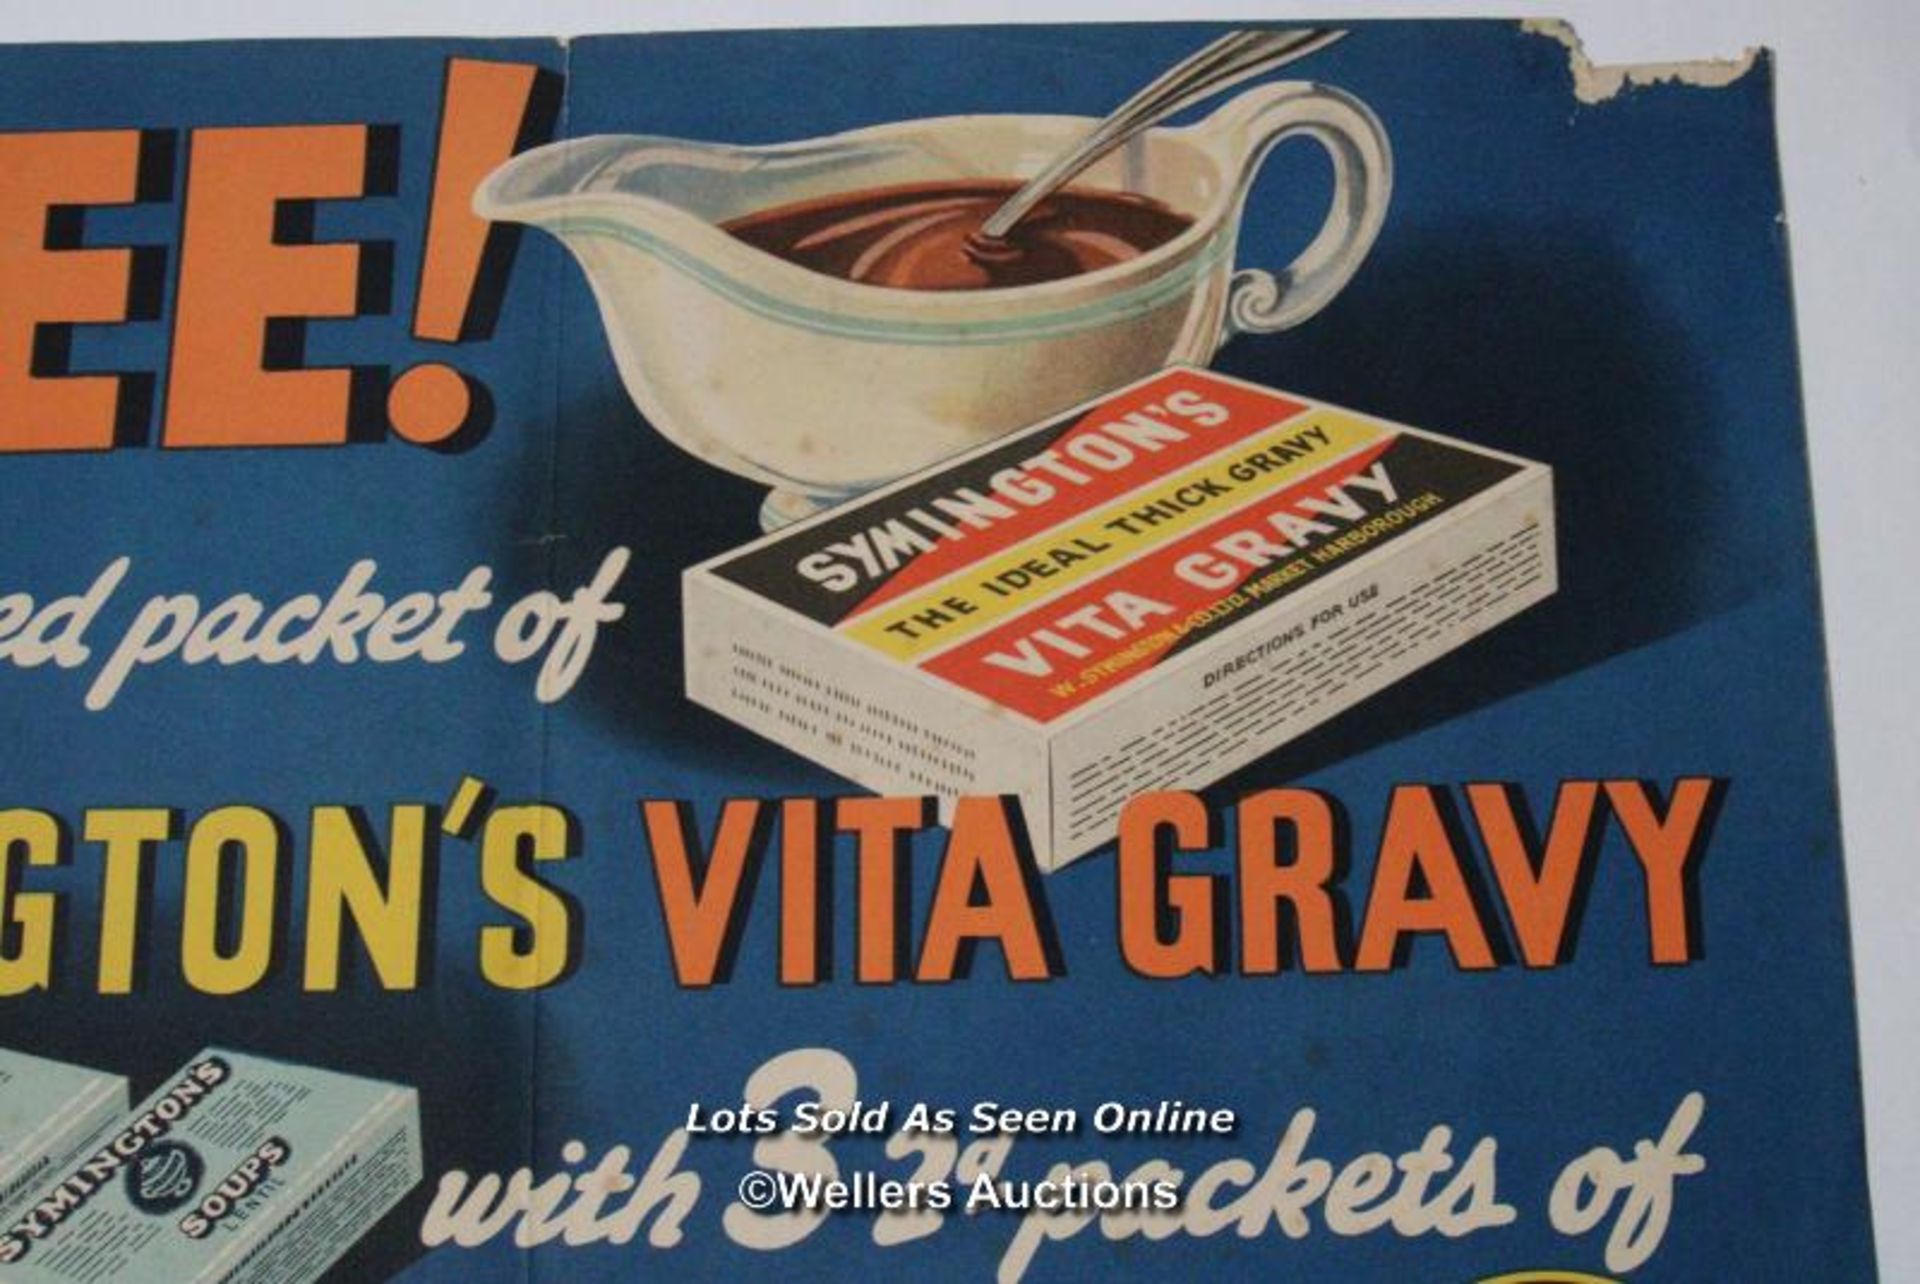 Vintage Symingtons Gravy poster - Image 3 of 5